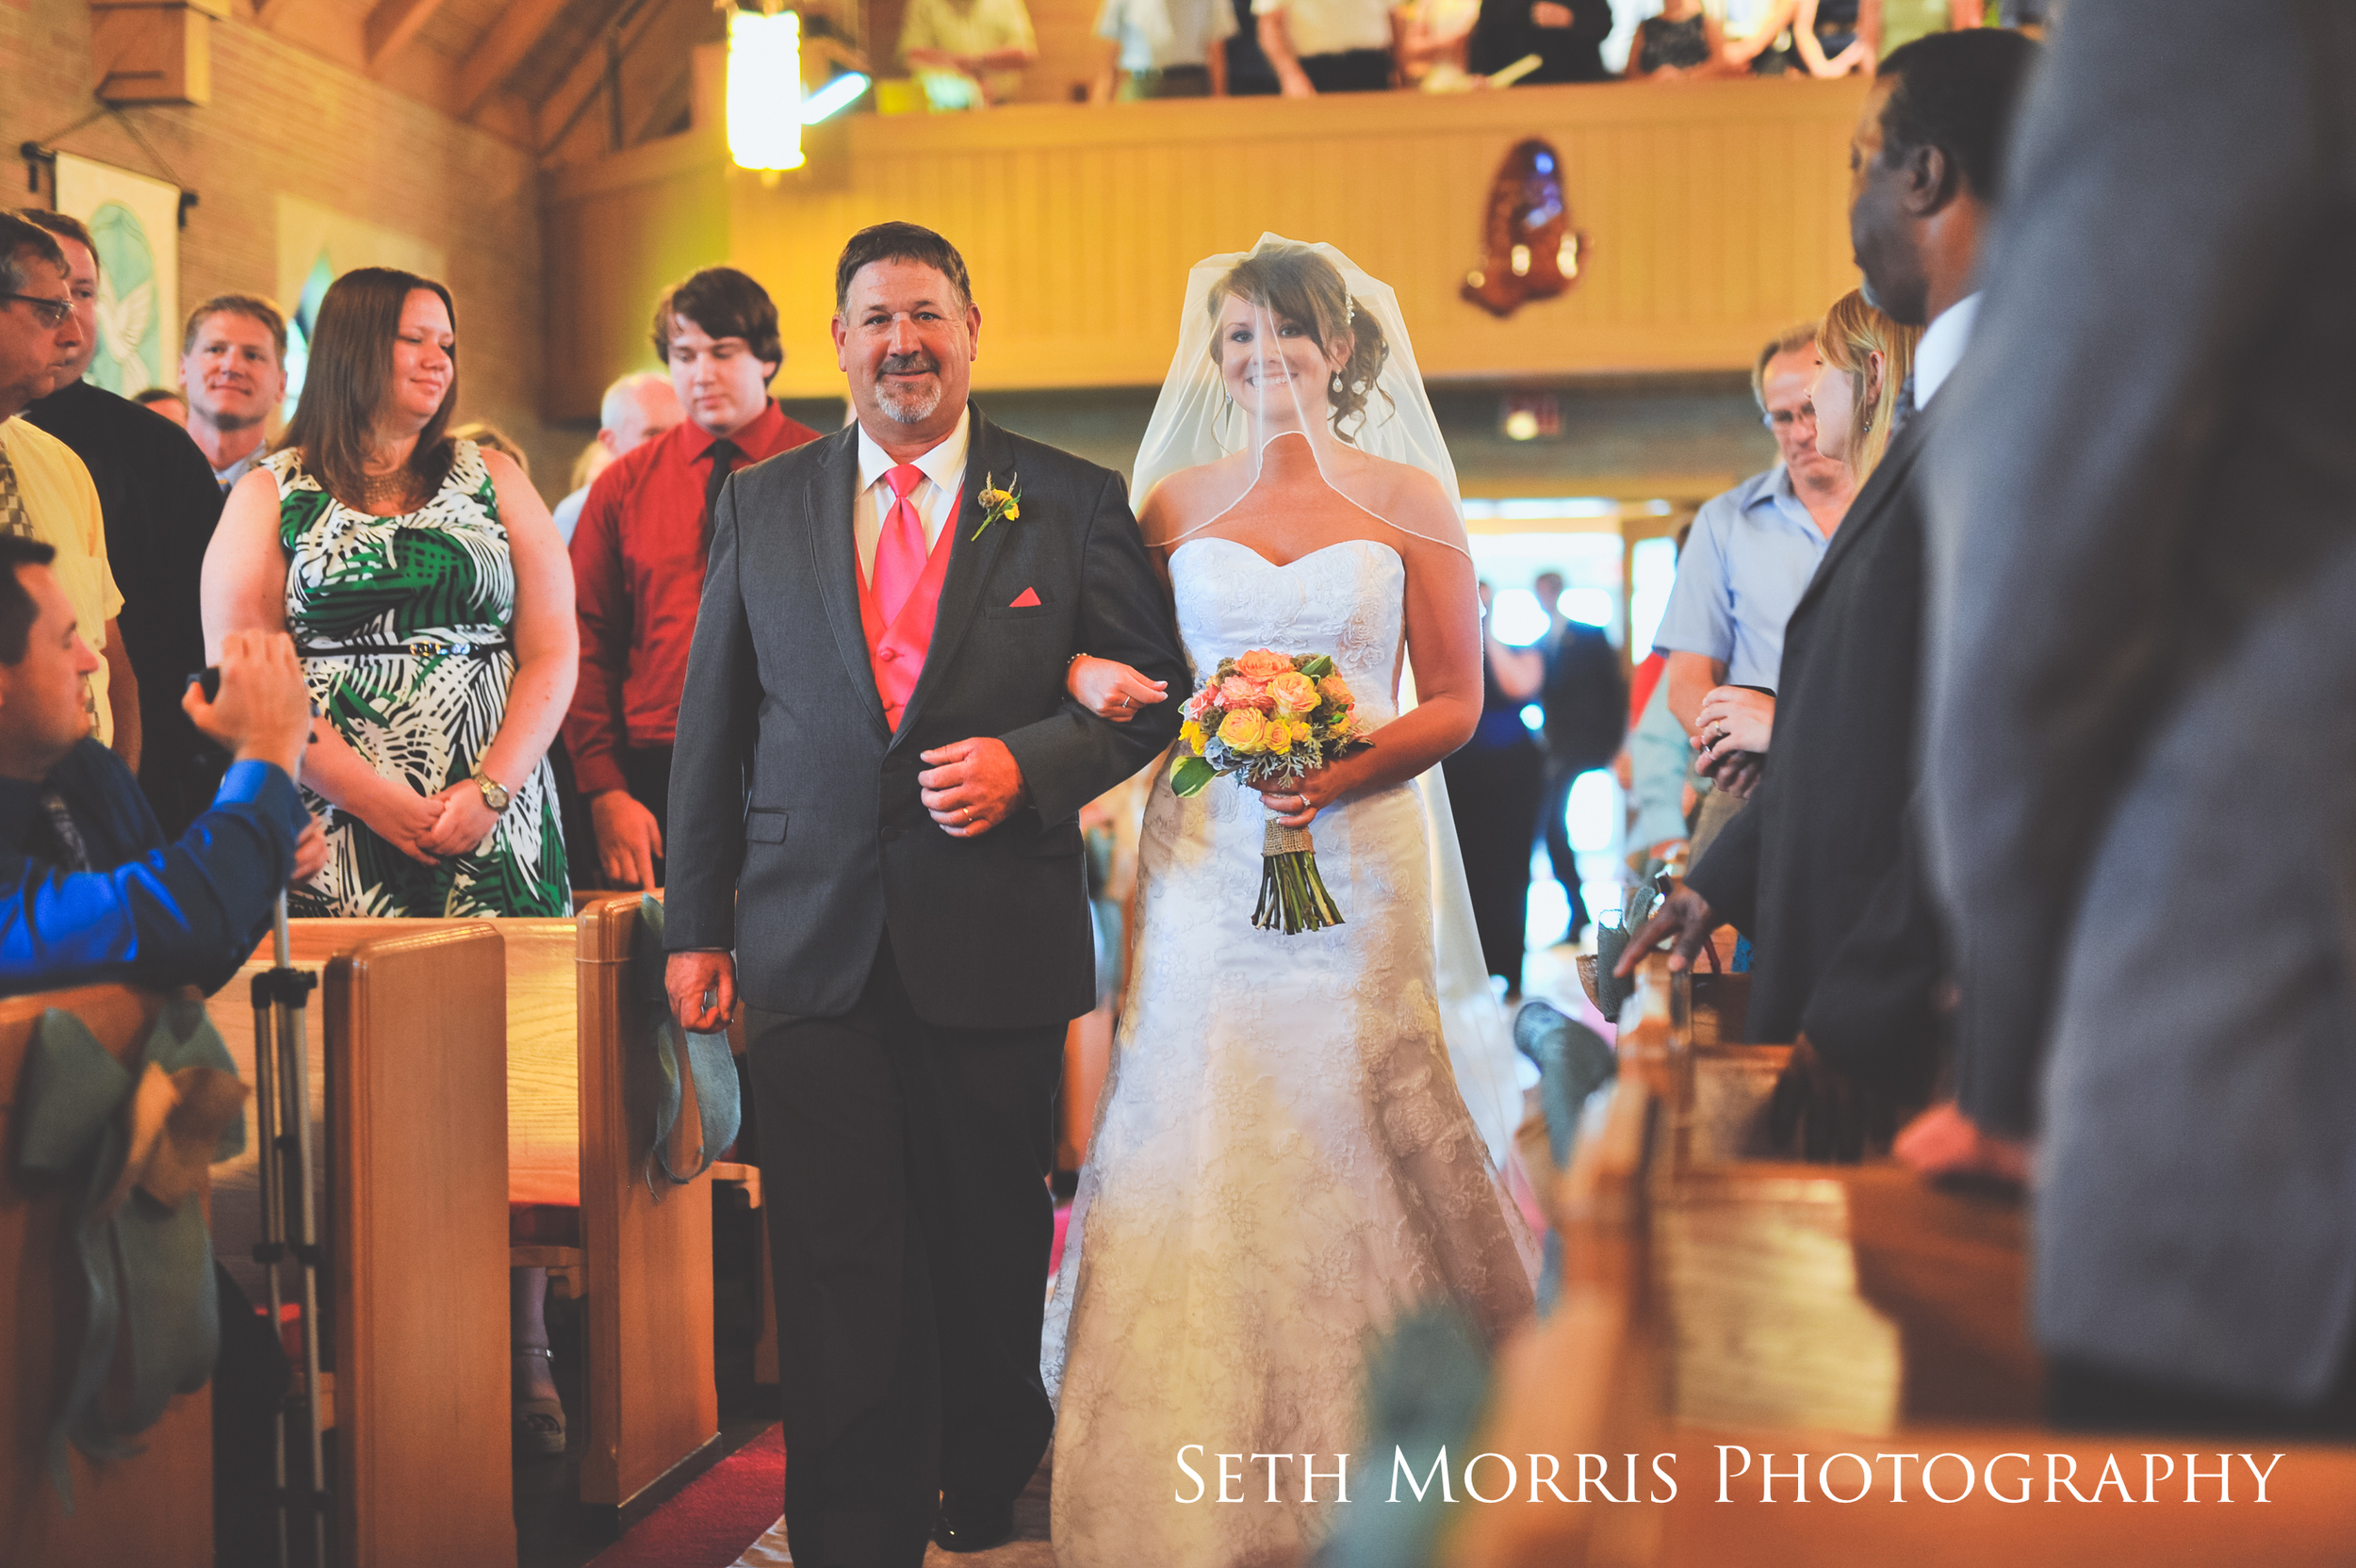 hornbaker-barn-wedding-photo-princeton-photographer-15.jpg